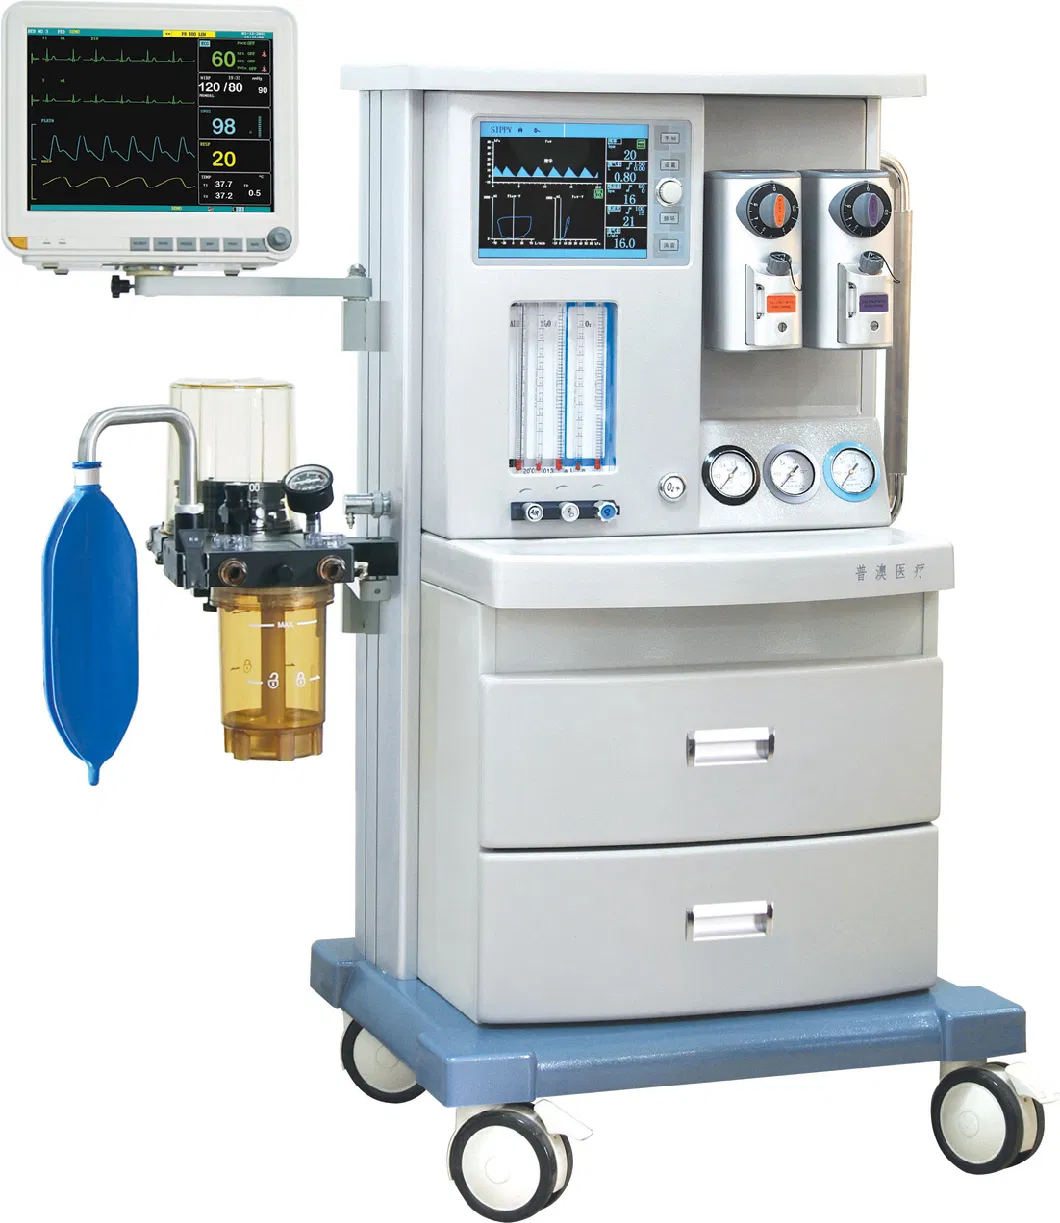 The Anaesthetic Vaporizer Machine Gas Repiratory Therapy Ventilator